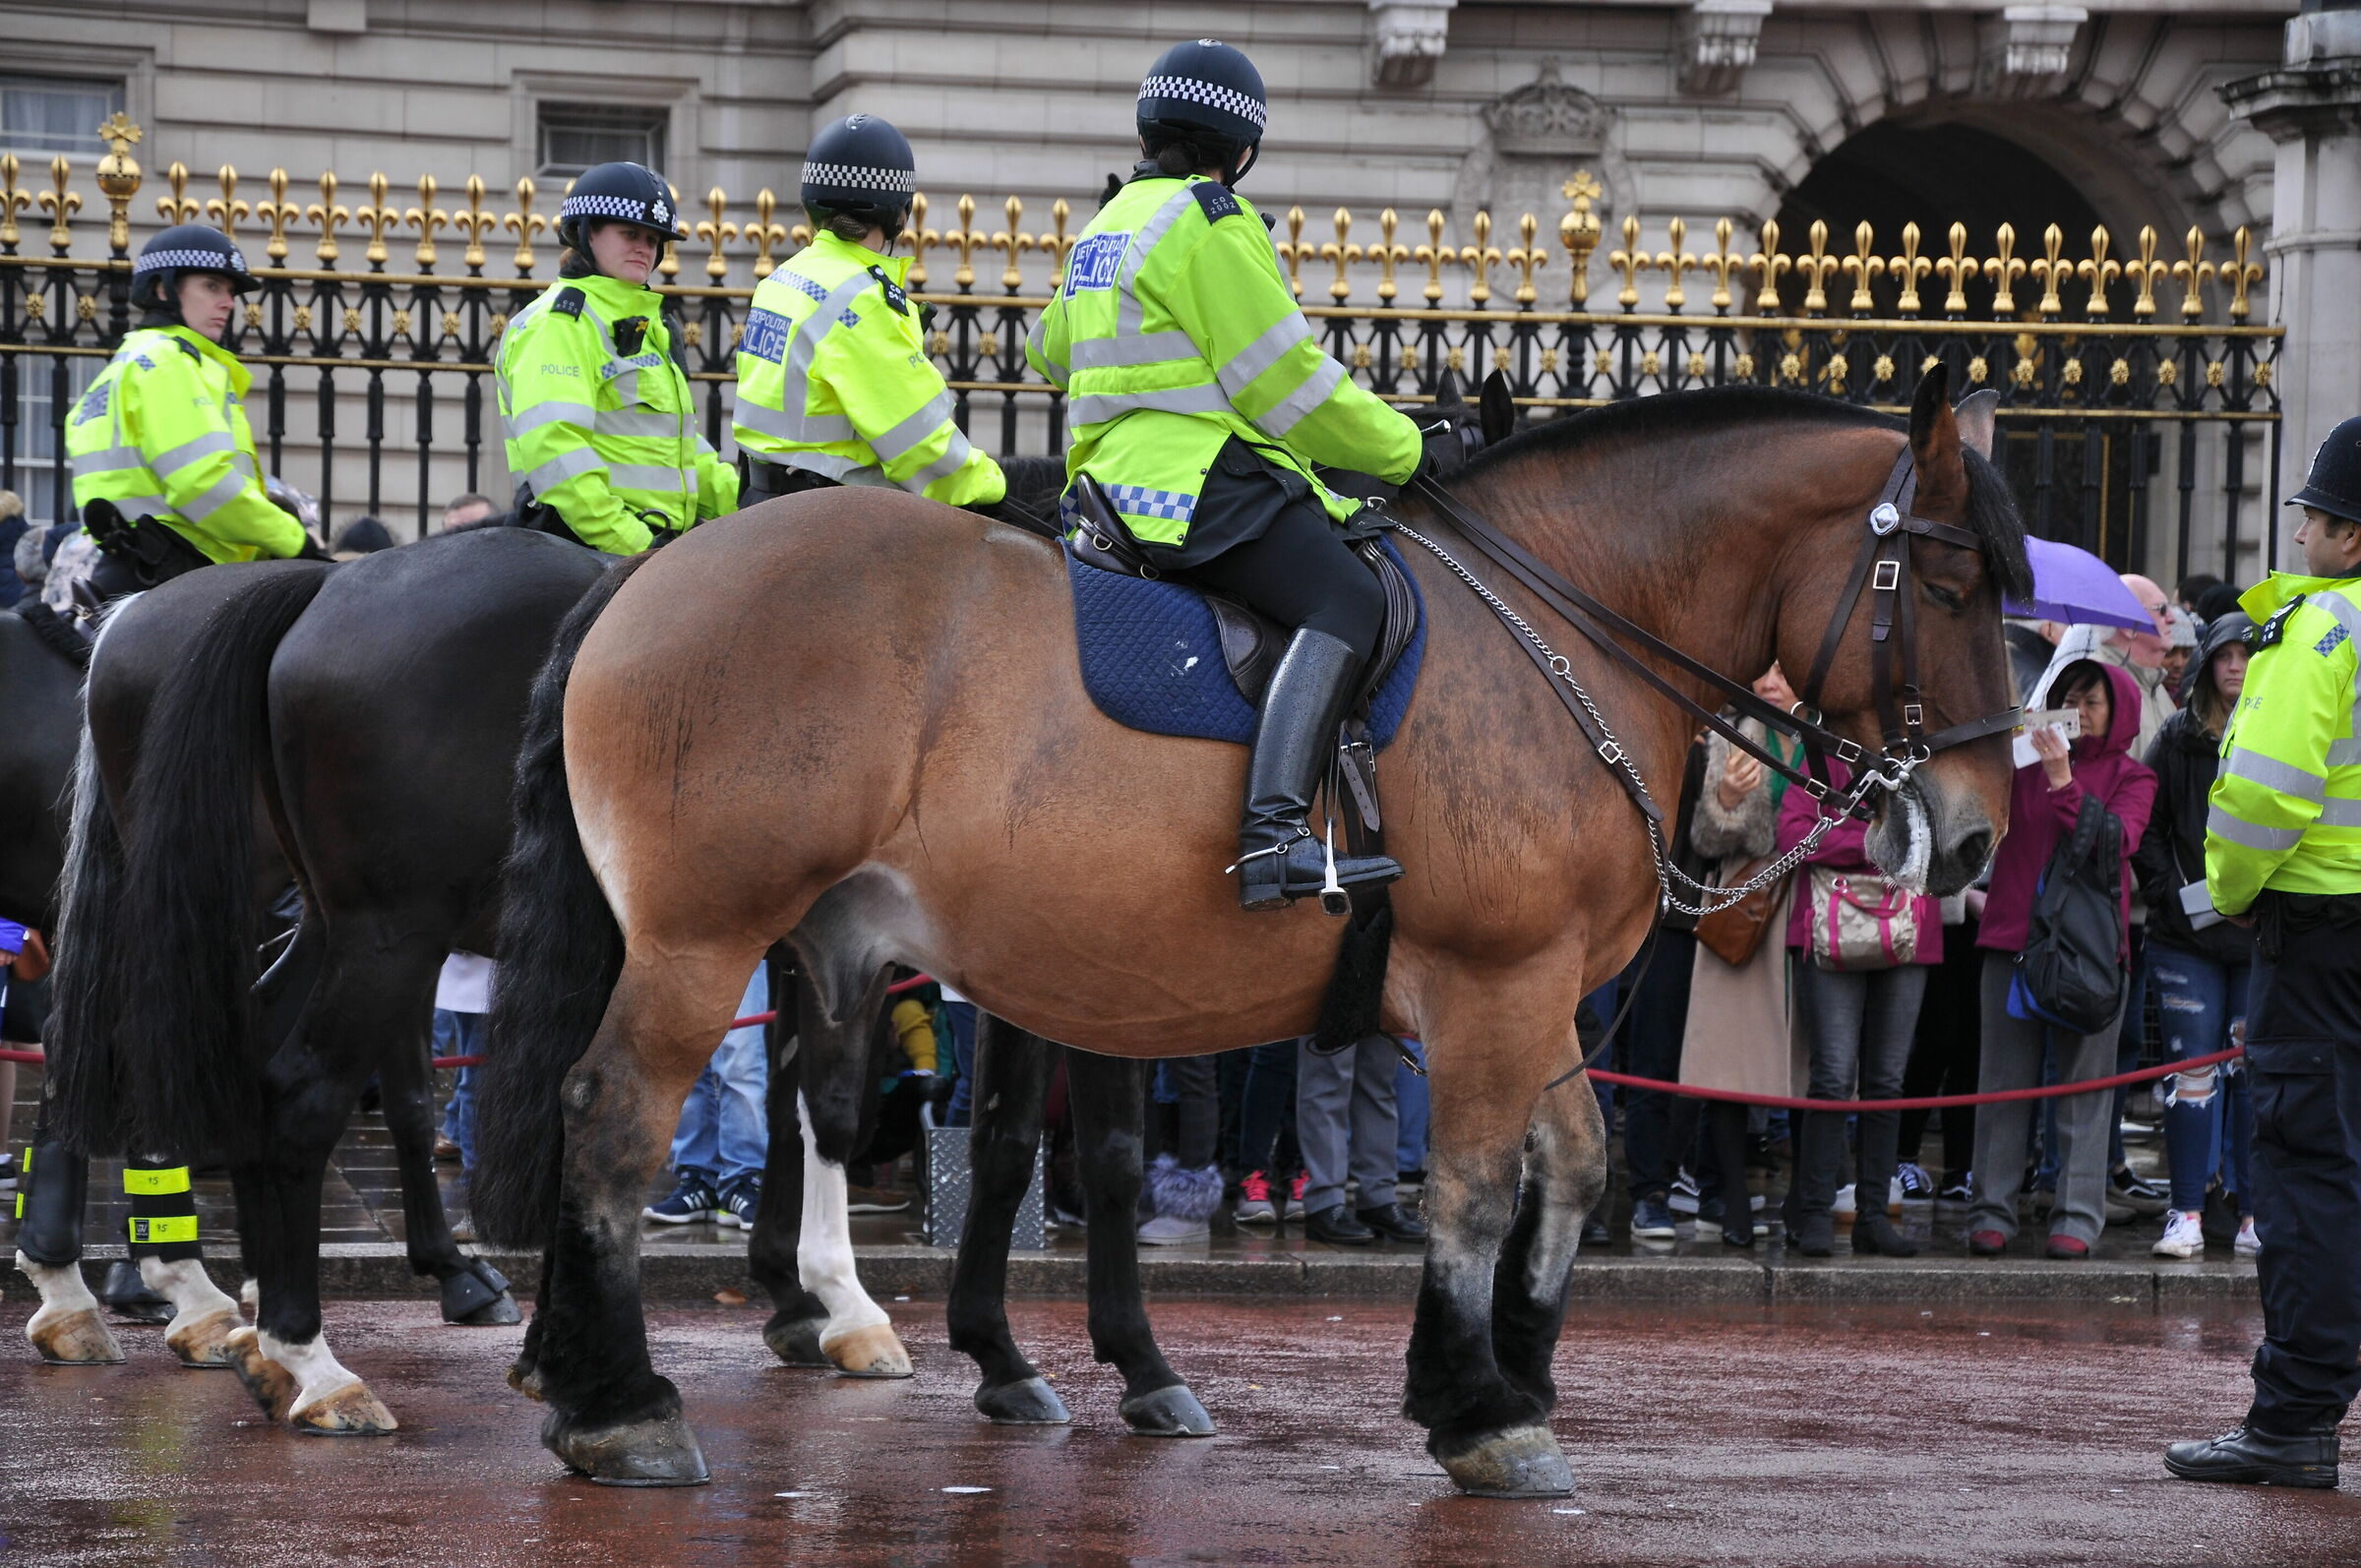 police on horseback...